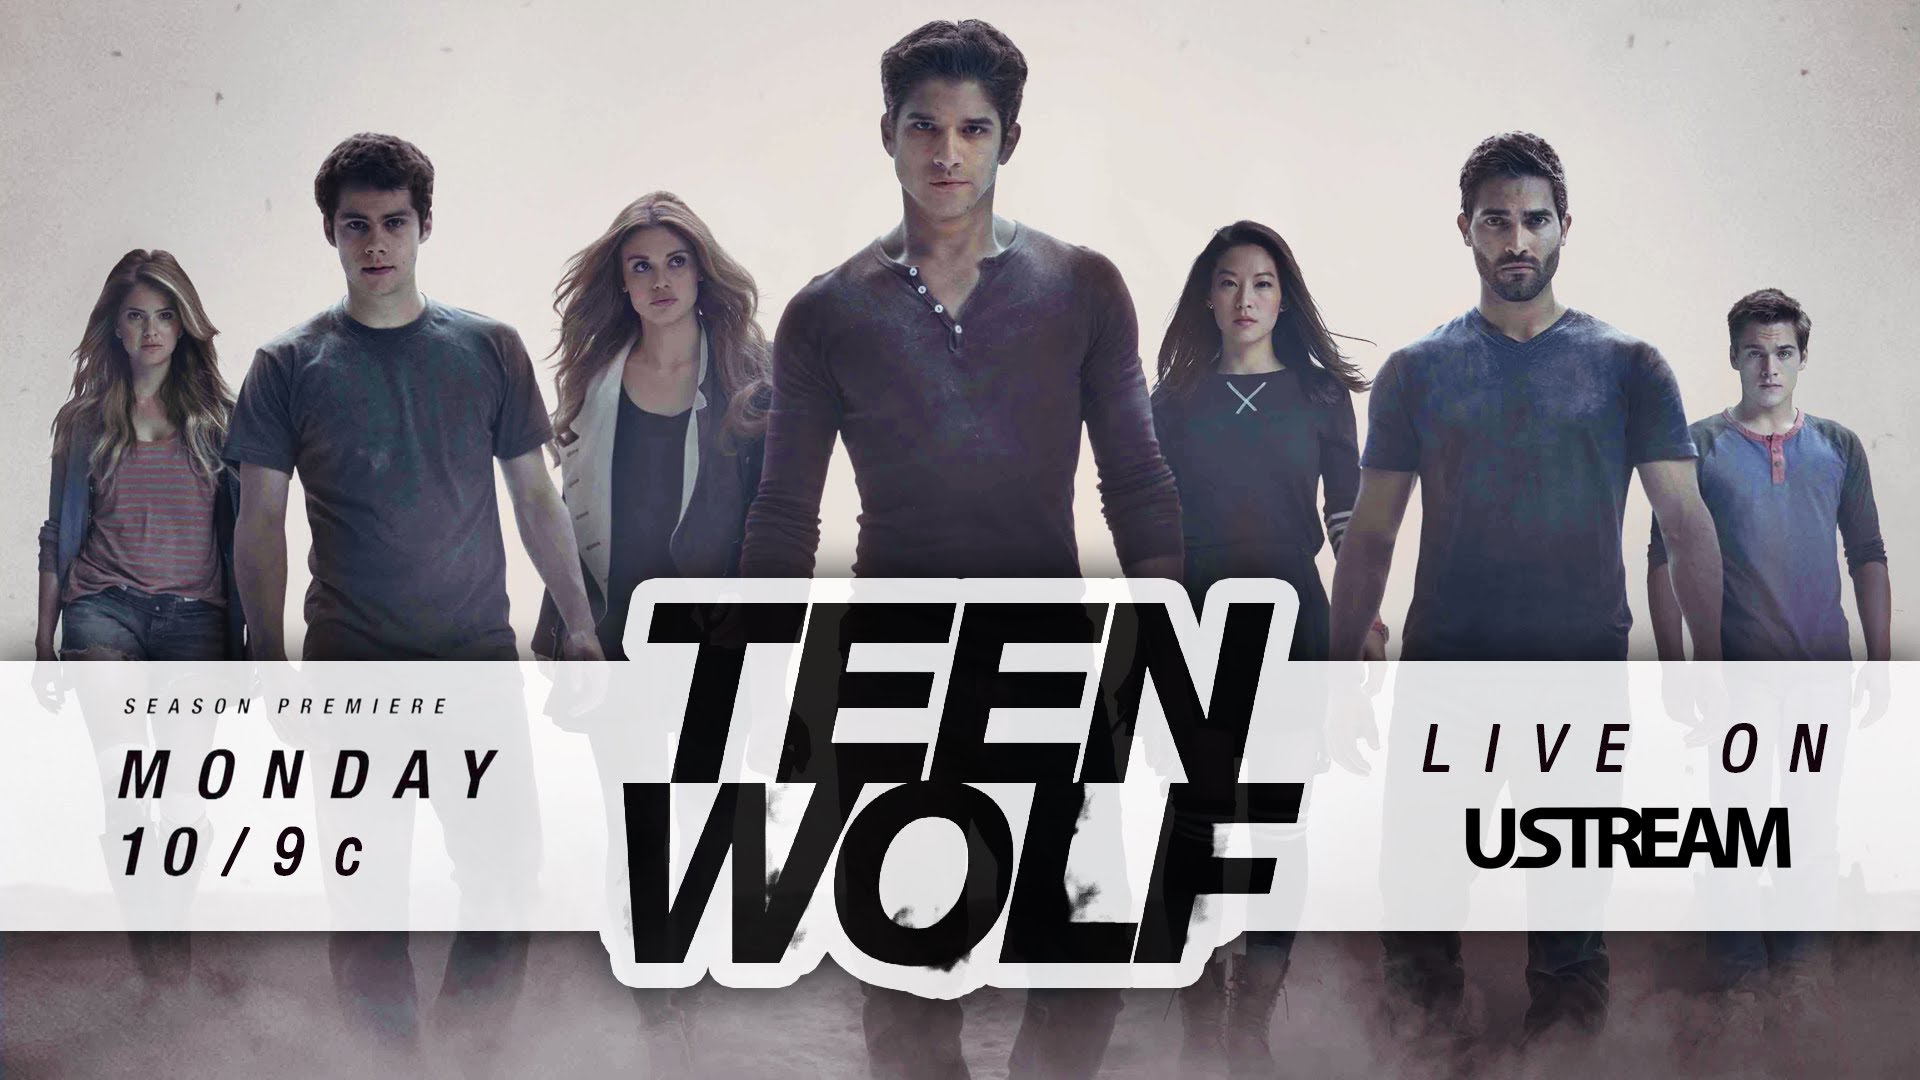 Teen Wolf Season Teaser Live On Ustream HD